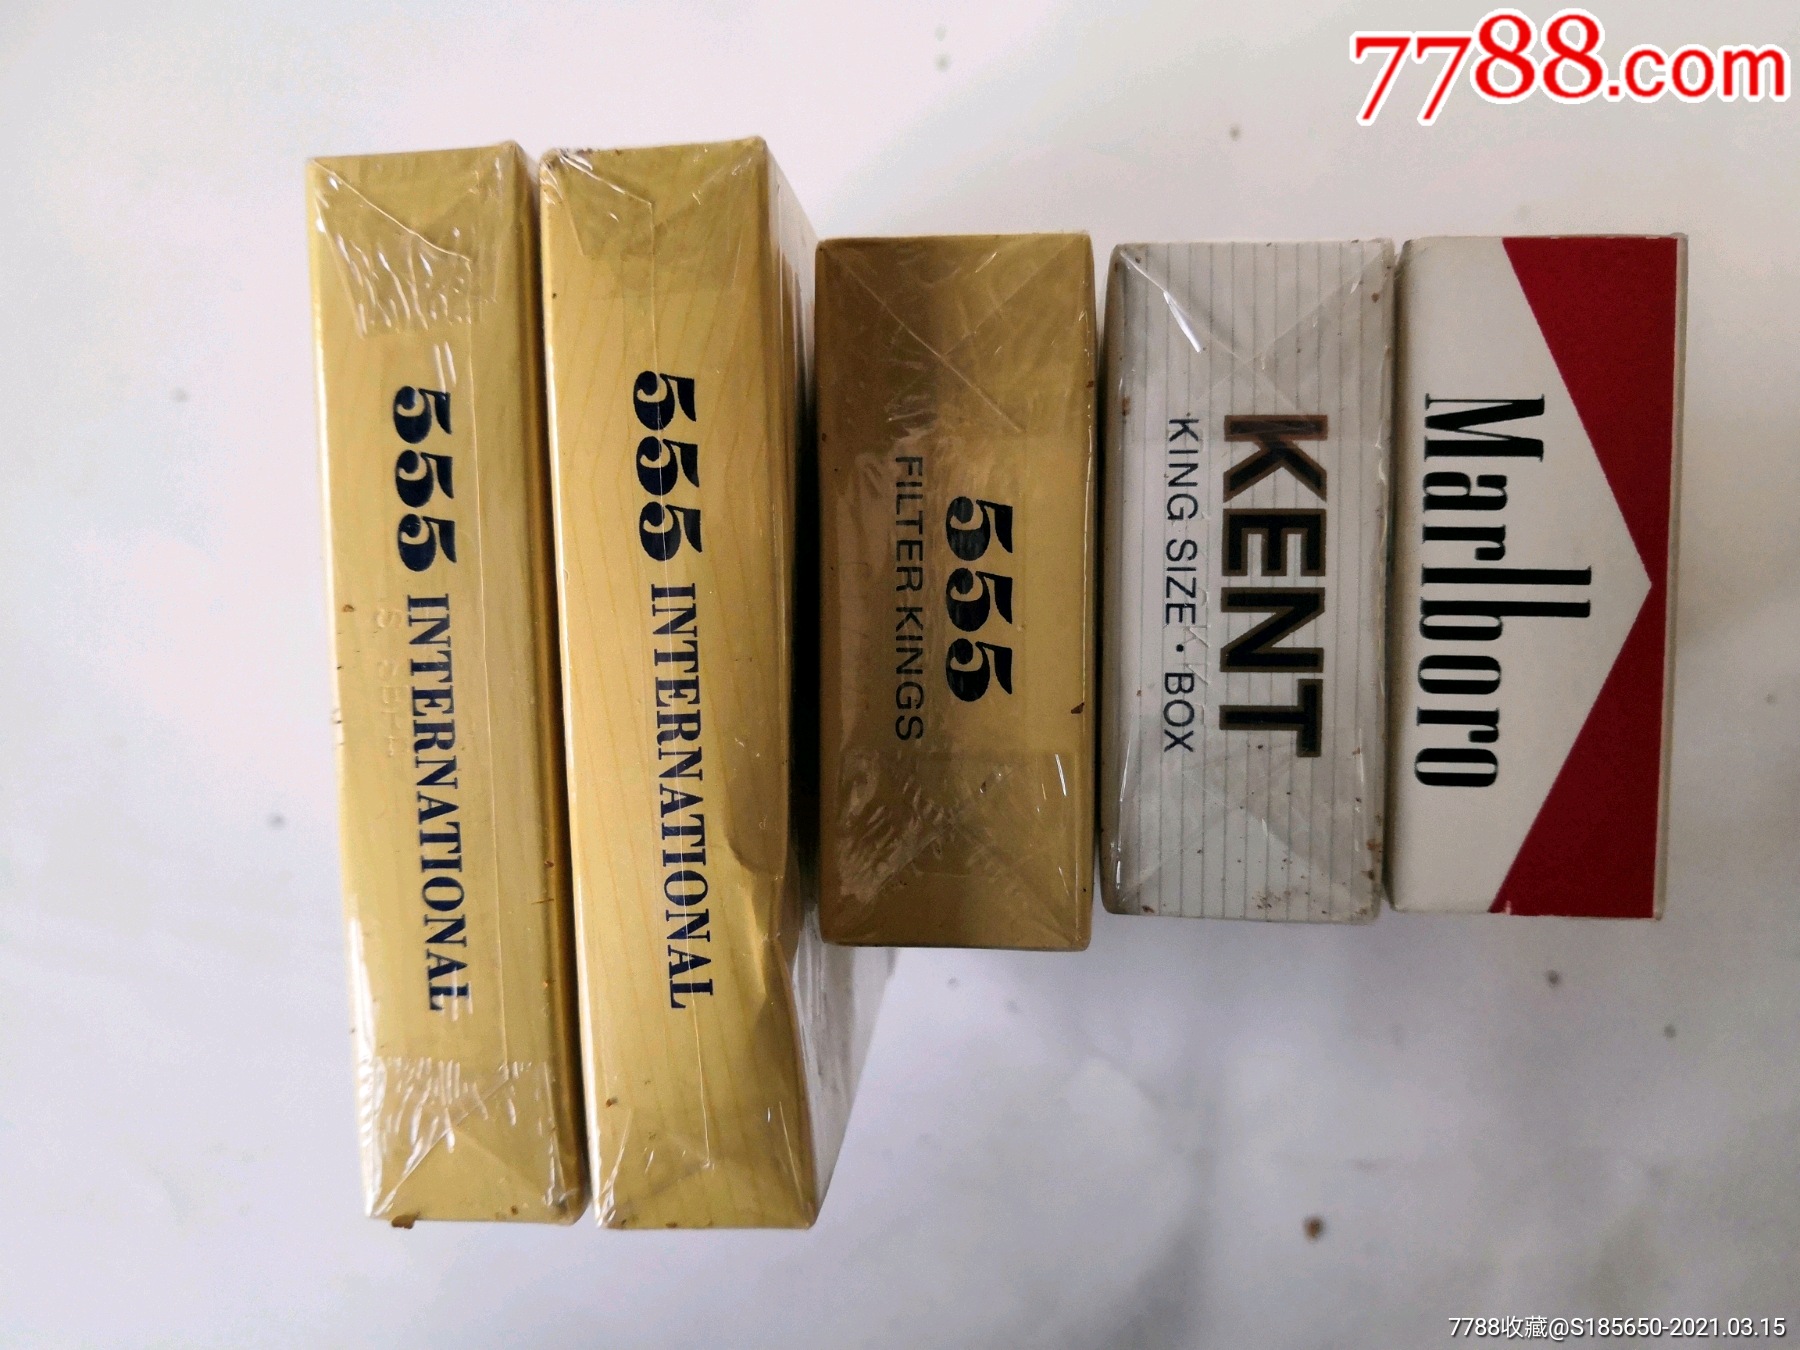 kent香烟价格表和图片图片